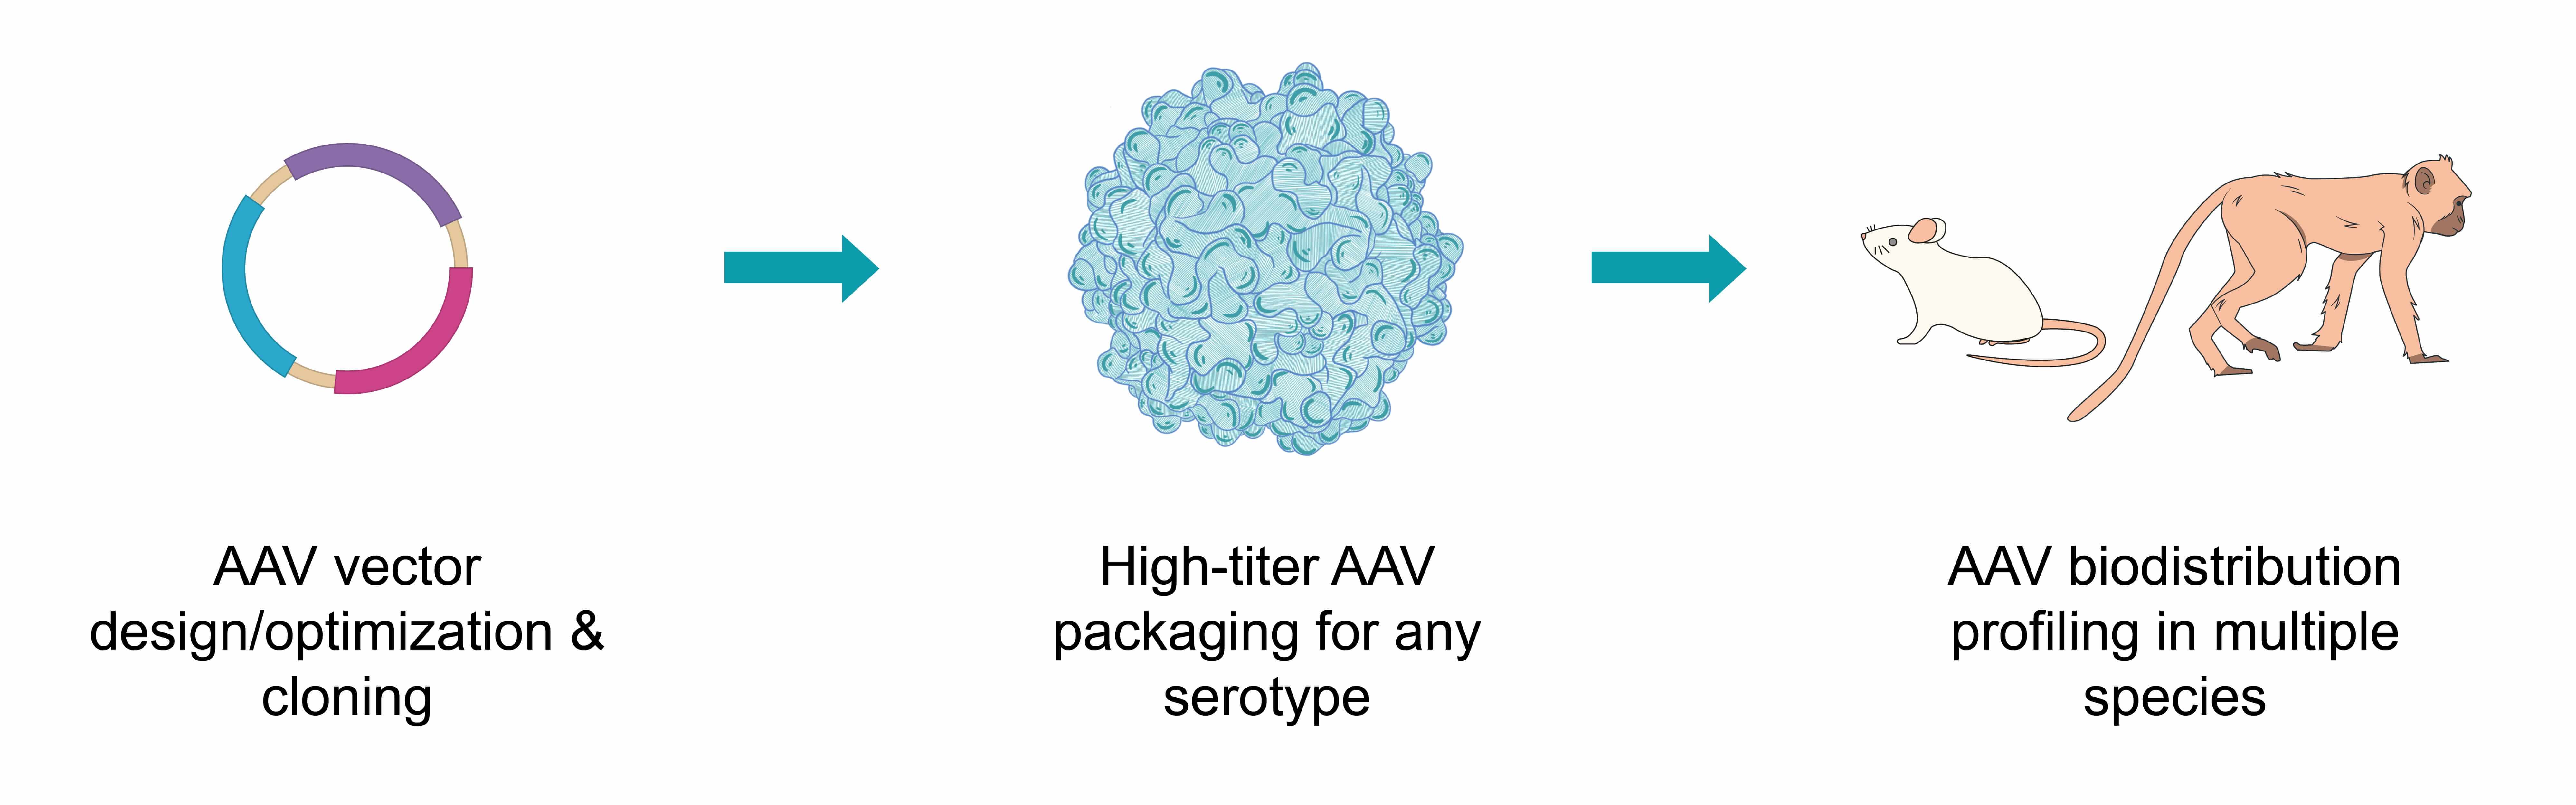 AAV vector optimization & design > AAV packaging for any serotype > AAV biodistribution profiling in multiple species.